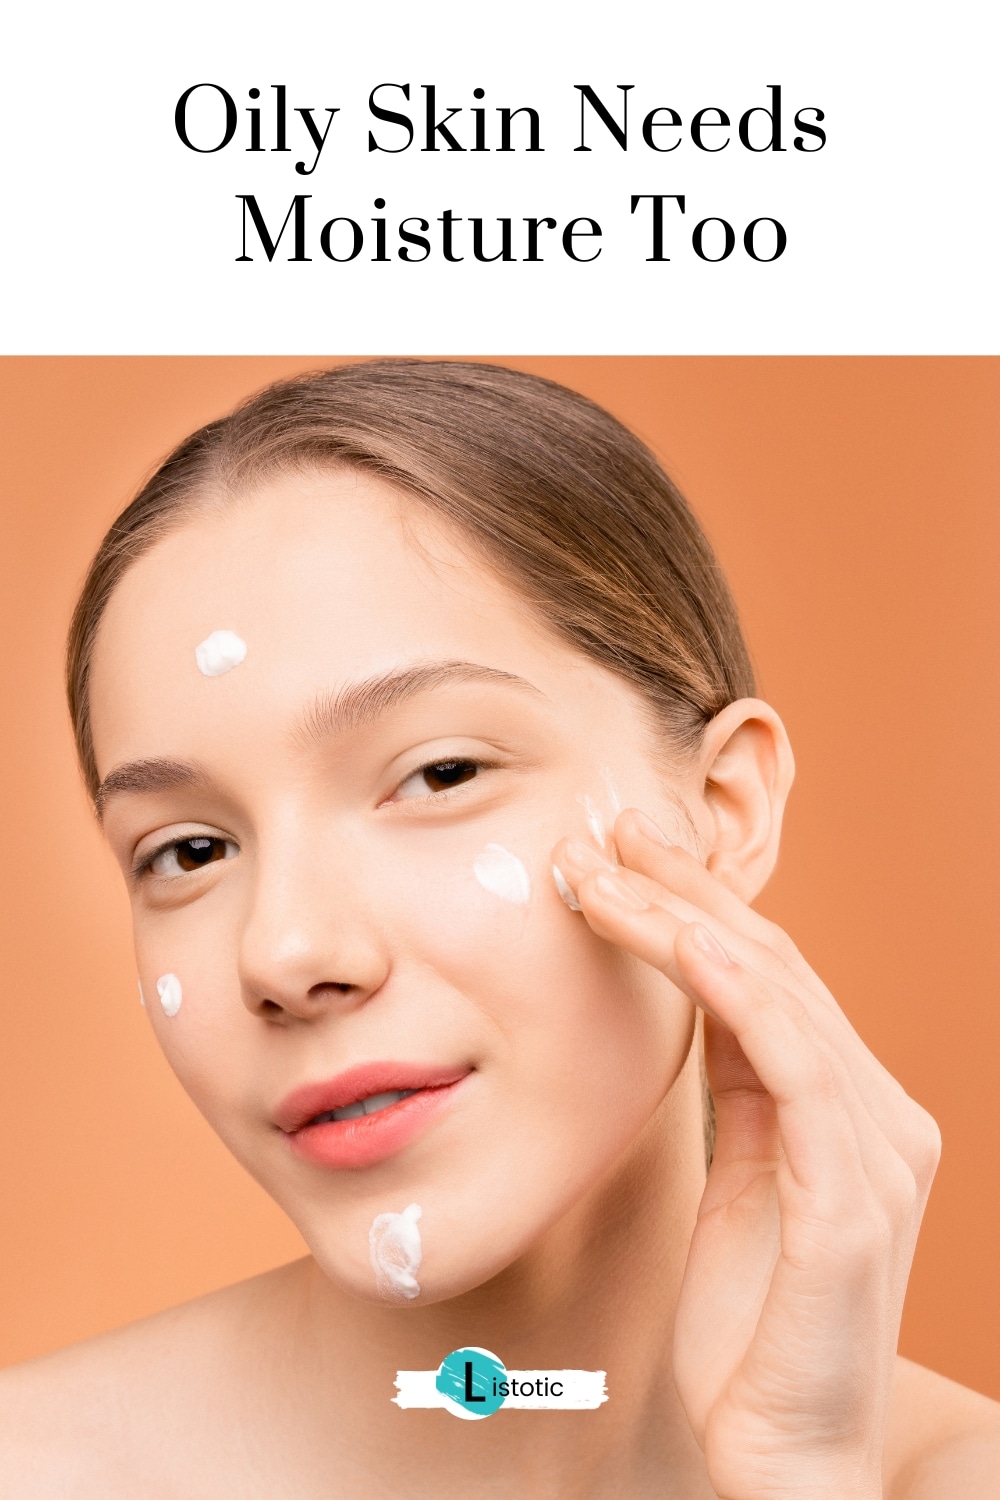 moisturizing oily skin